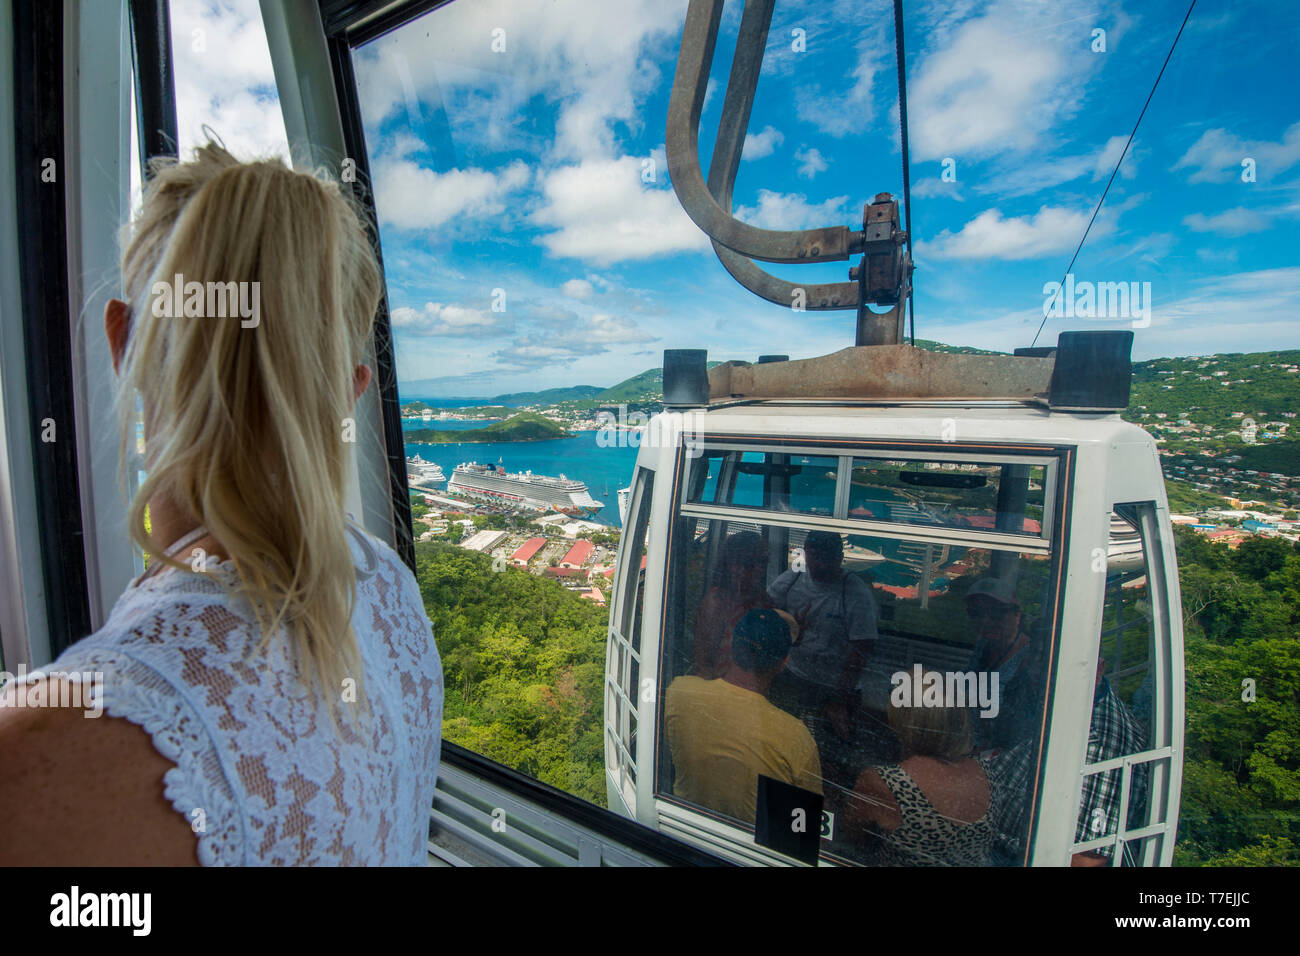 Skyride aerial tram gondolas, Charlotte Amalie, St. Thomas, US Virgin Islands. Stock Photo